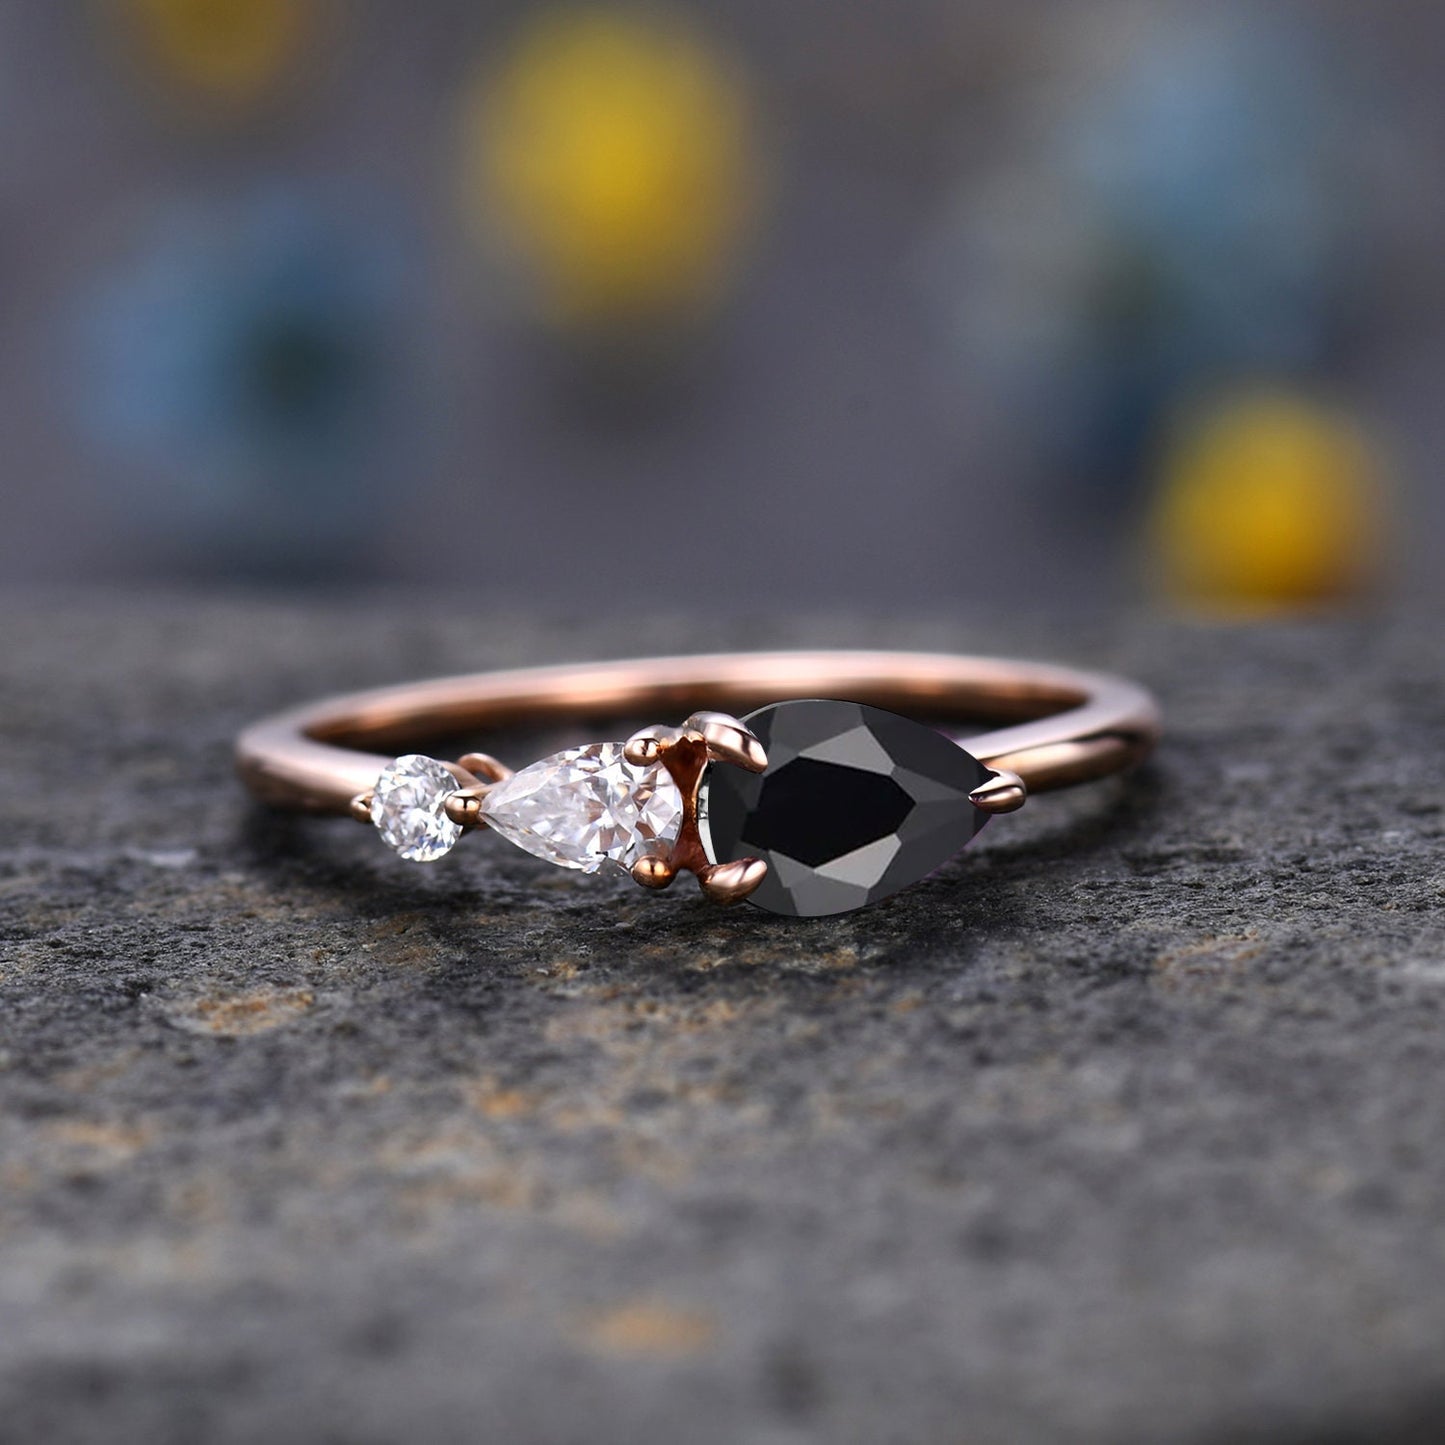 Vintage Black Onyx Engagement Ring,Pear Cut Gems,Art Deco Moissanite Wedding Band,3 Stone Unique Women Bridal Promise Ring Gift,Gold Ring